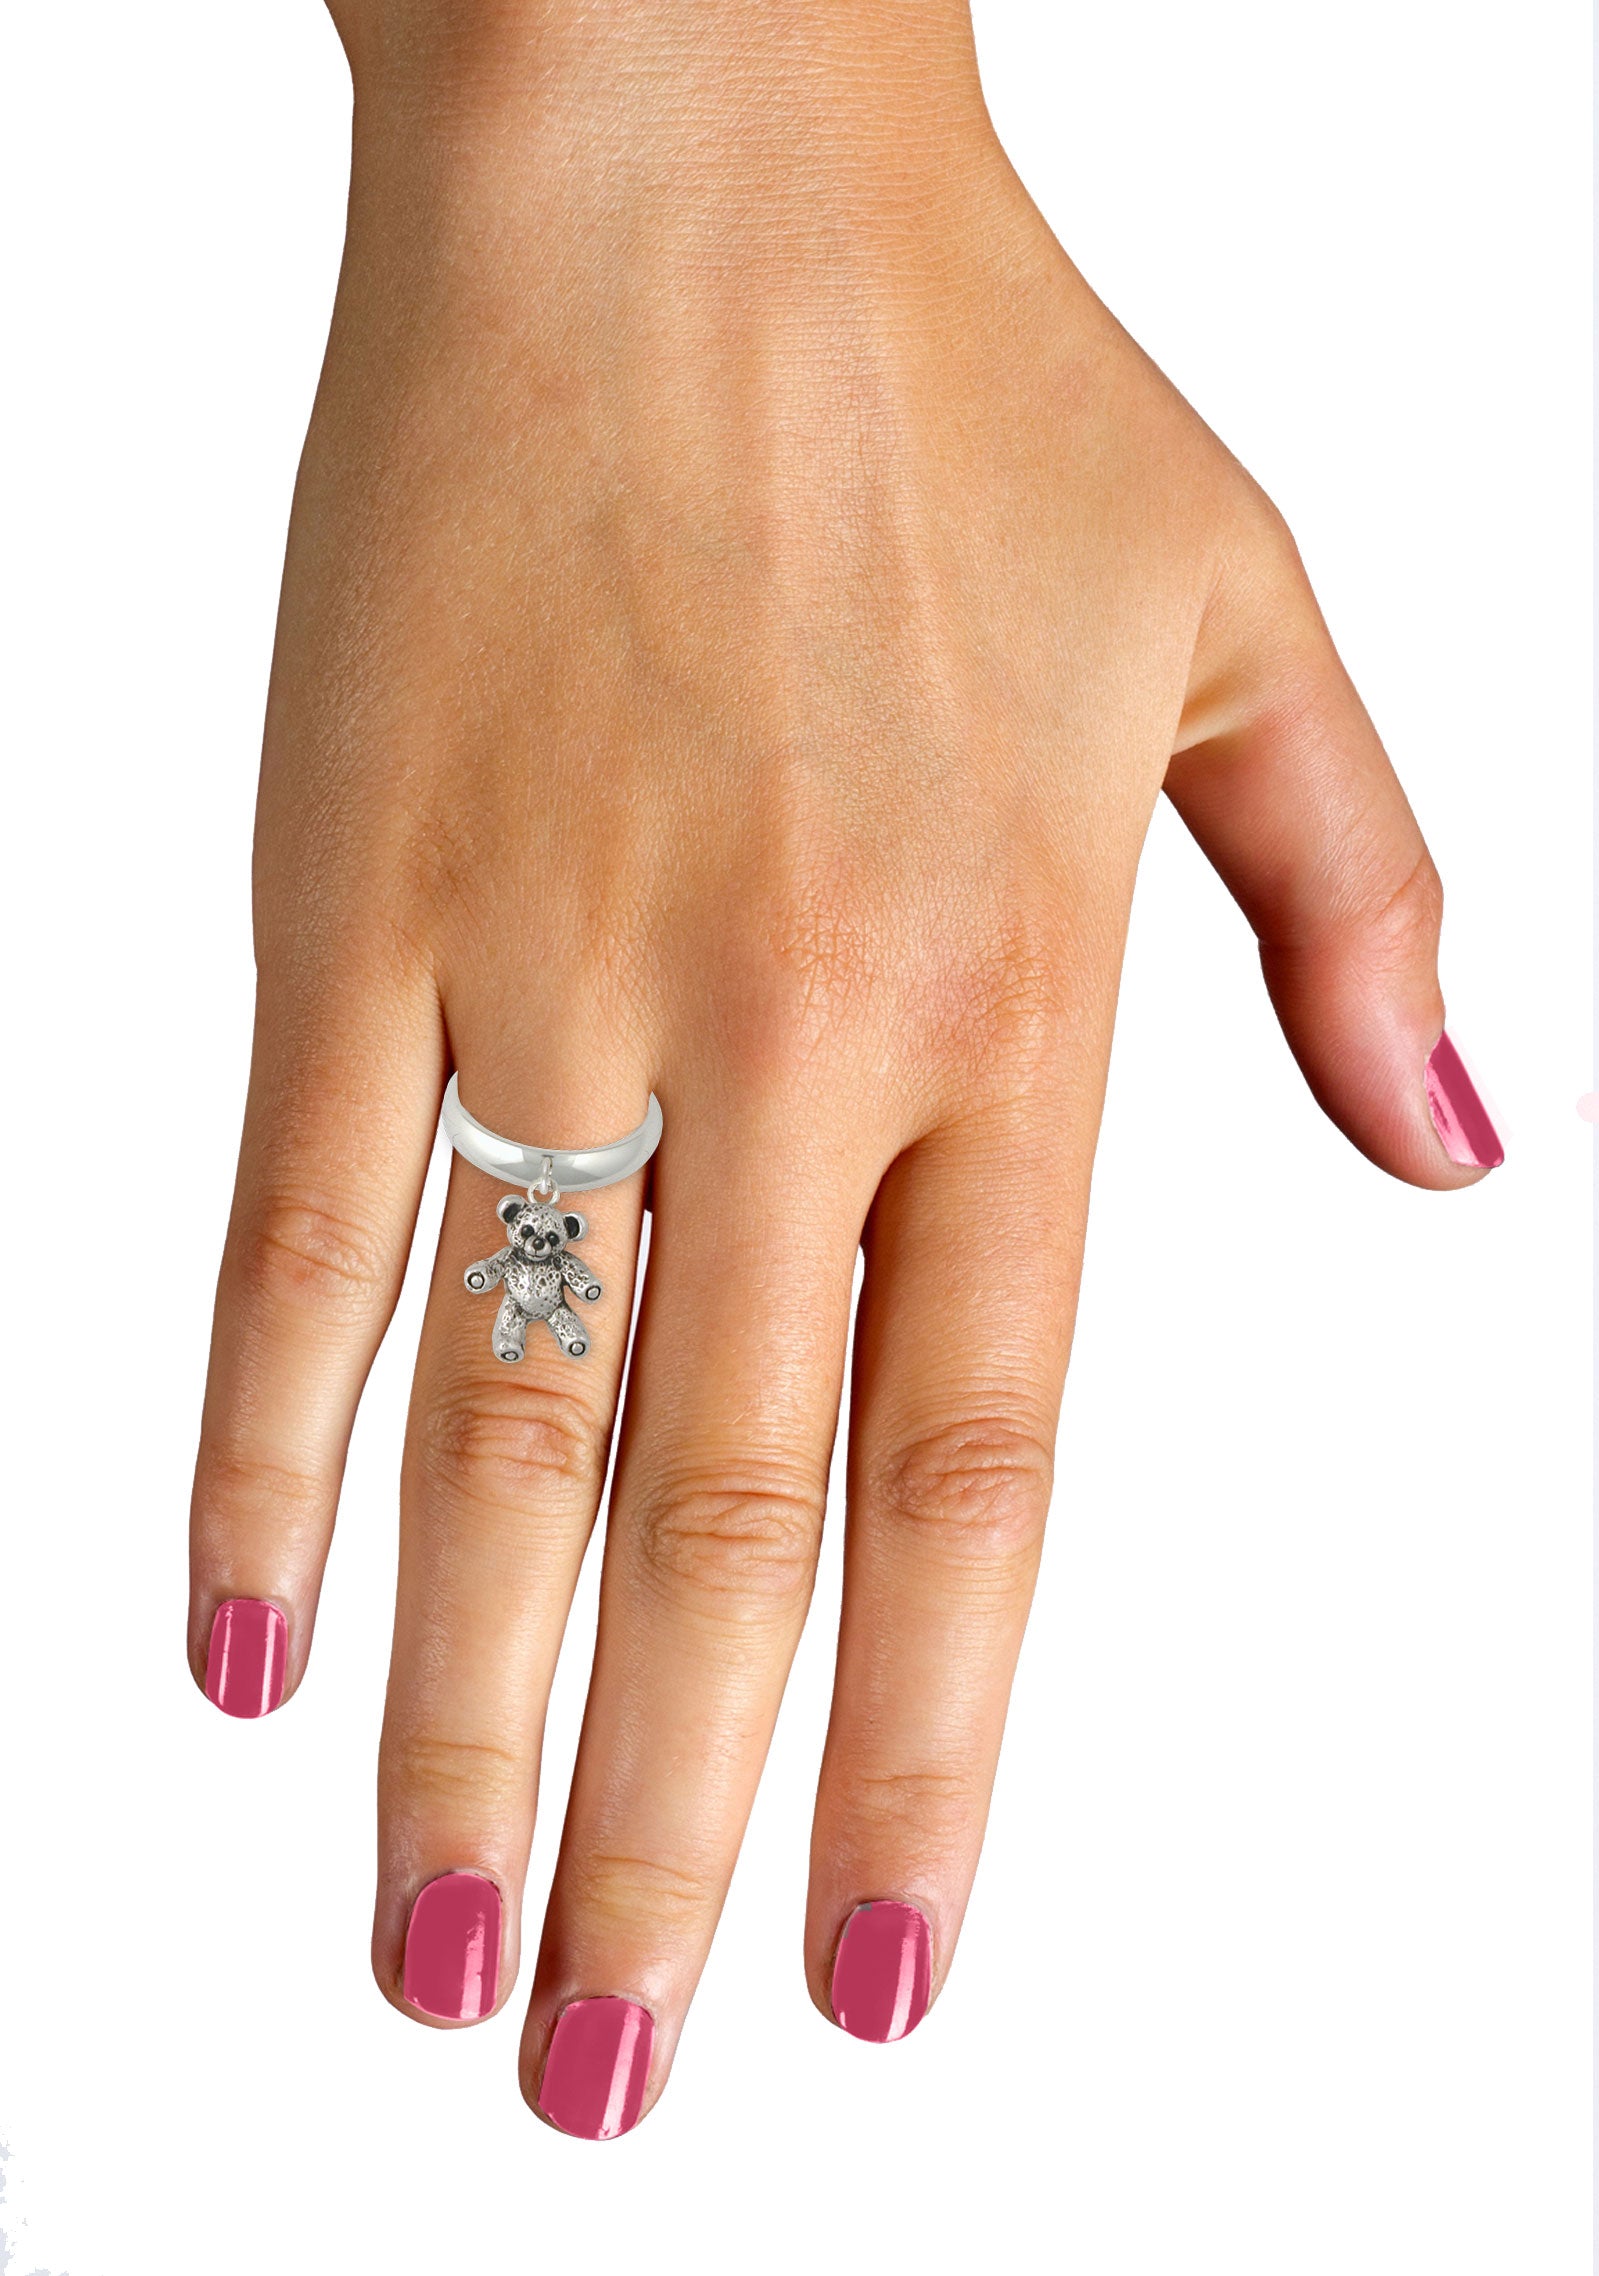 Rhodium Plated Sterling Silver Teddy Bear Ring Size 8 - Walmart.com